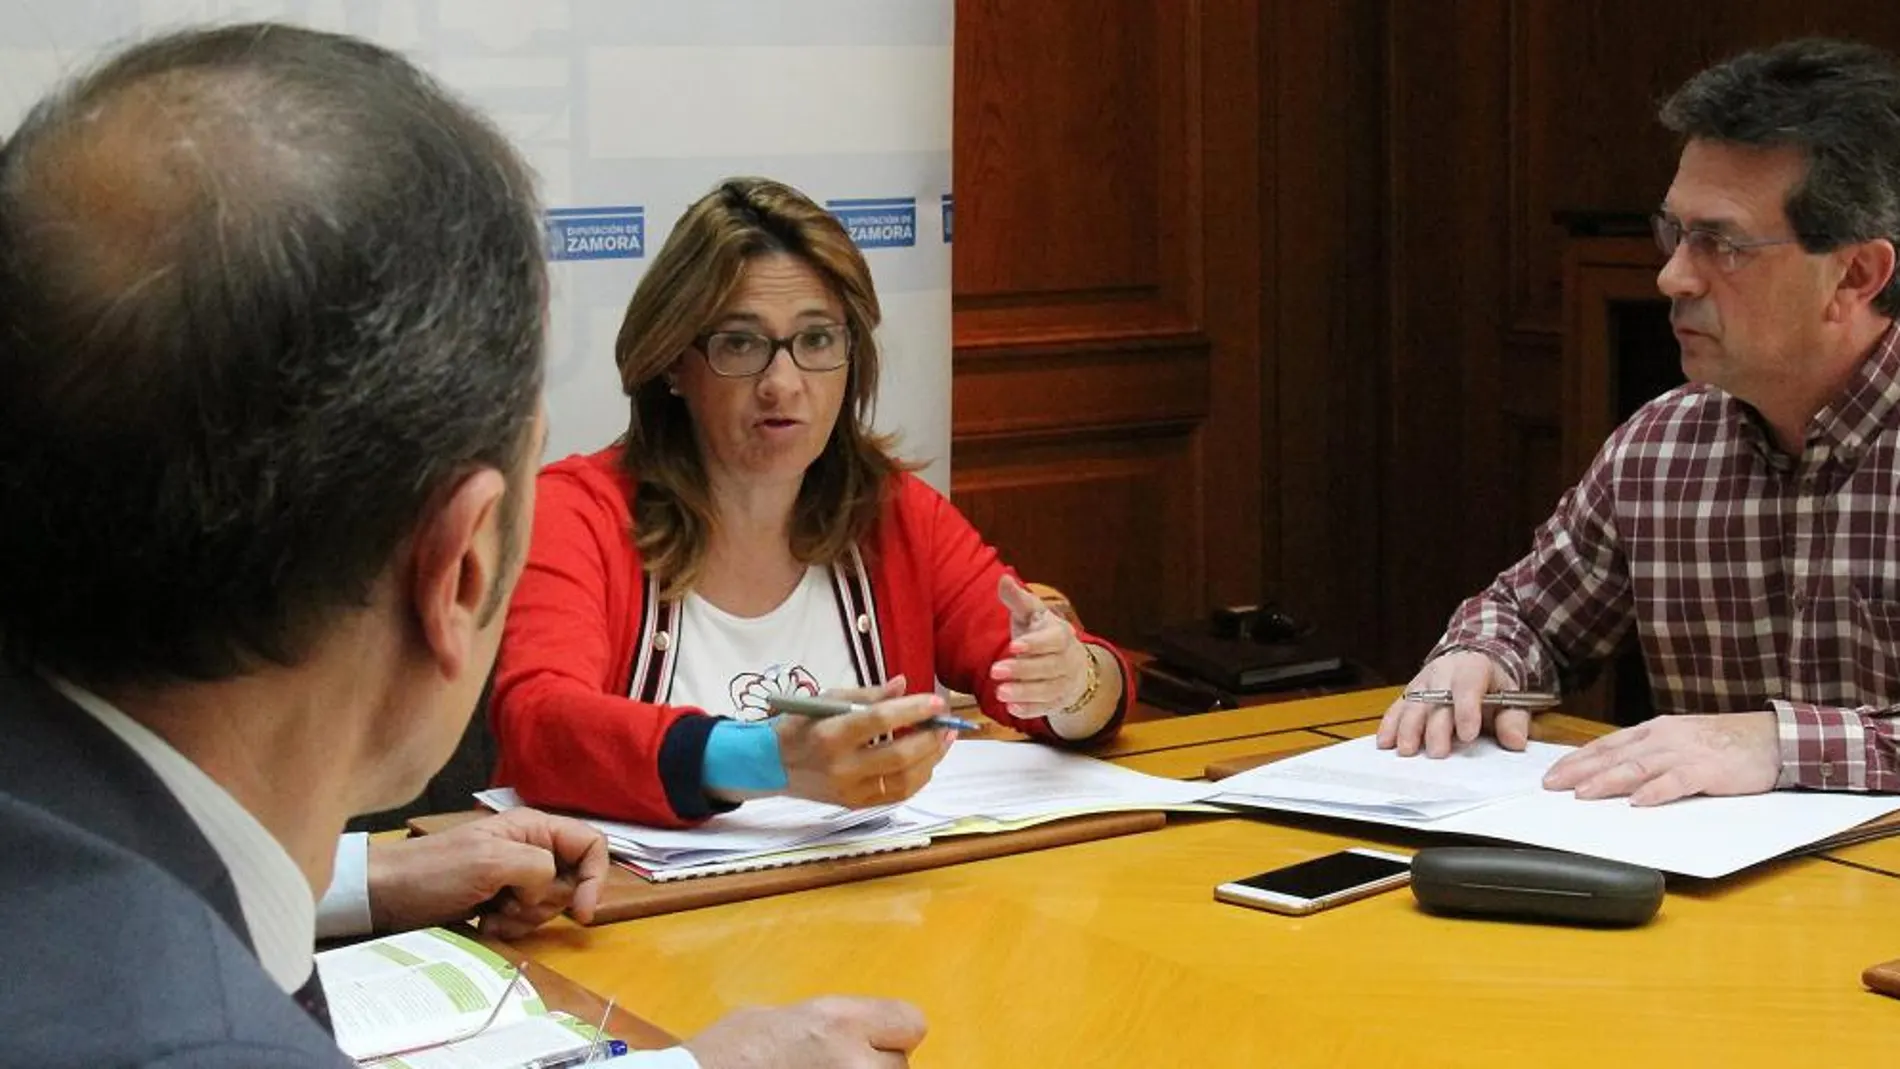 La presidenta de la Diputación de Zamora, Mayte Martín, preside la Mesa del Diálogo Social zamorana /J. L. Leal/Ical